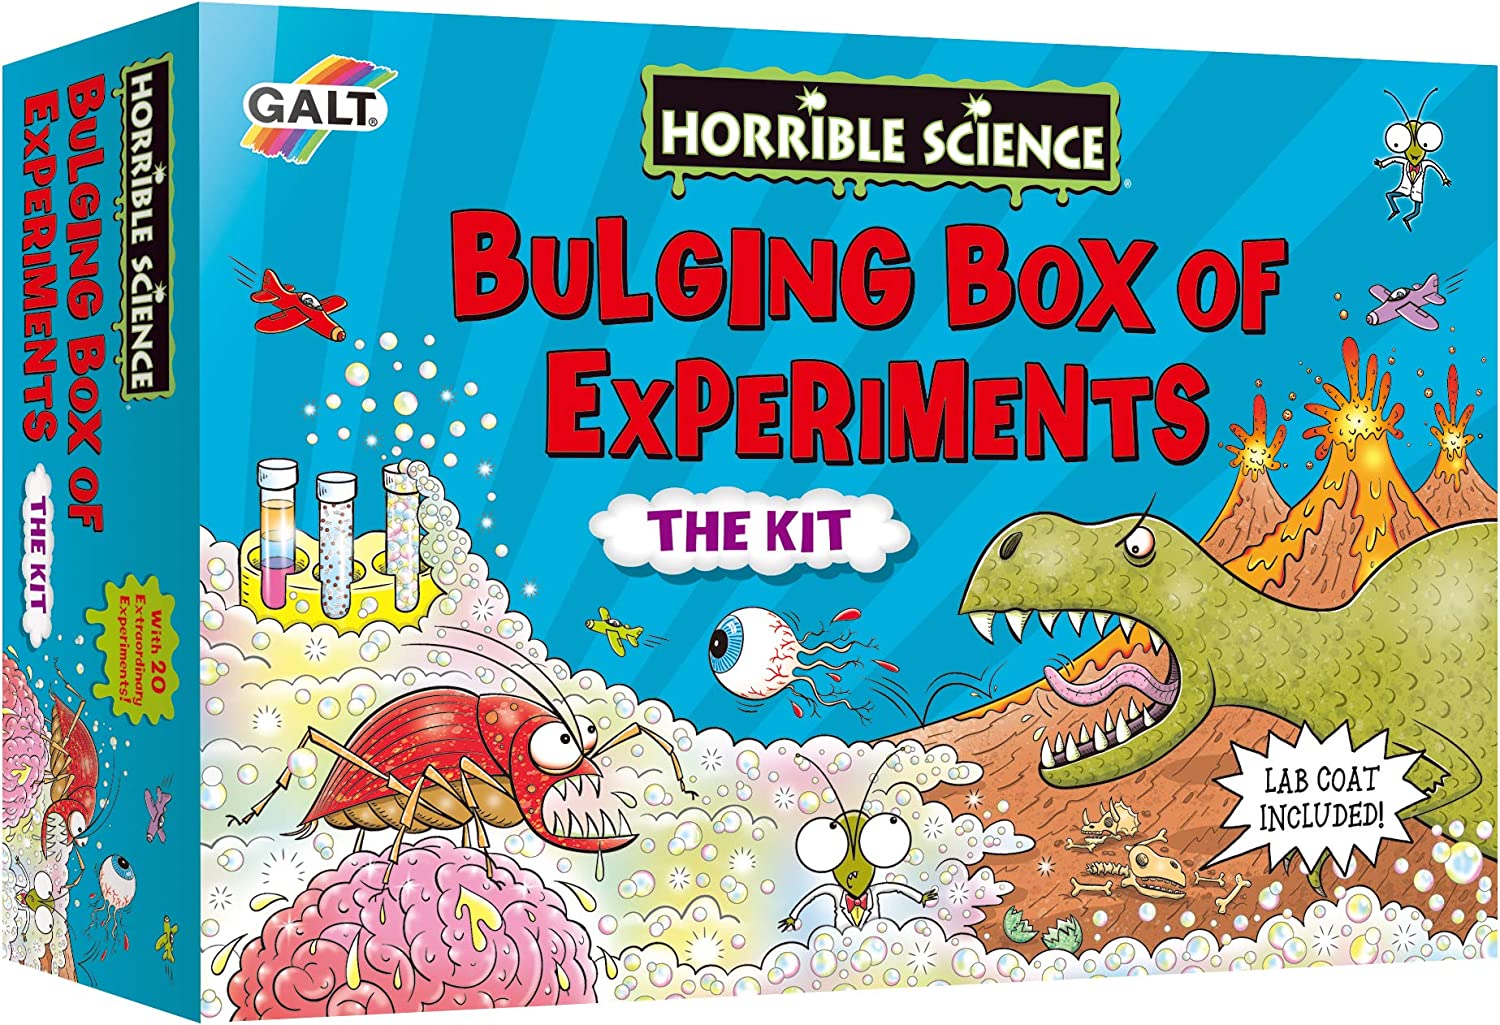 BULGING BOX OF EXPERIMENTS